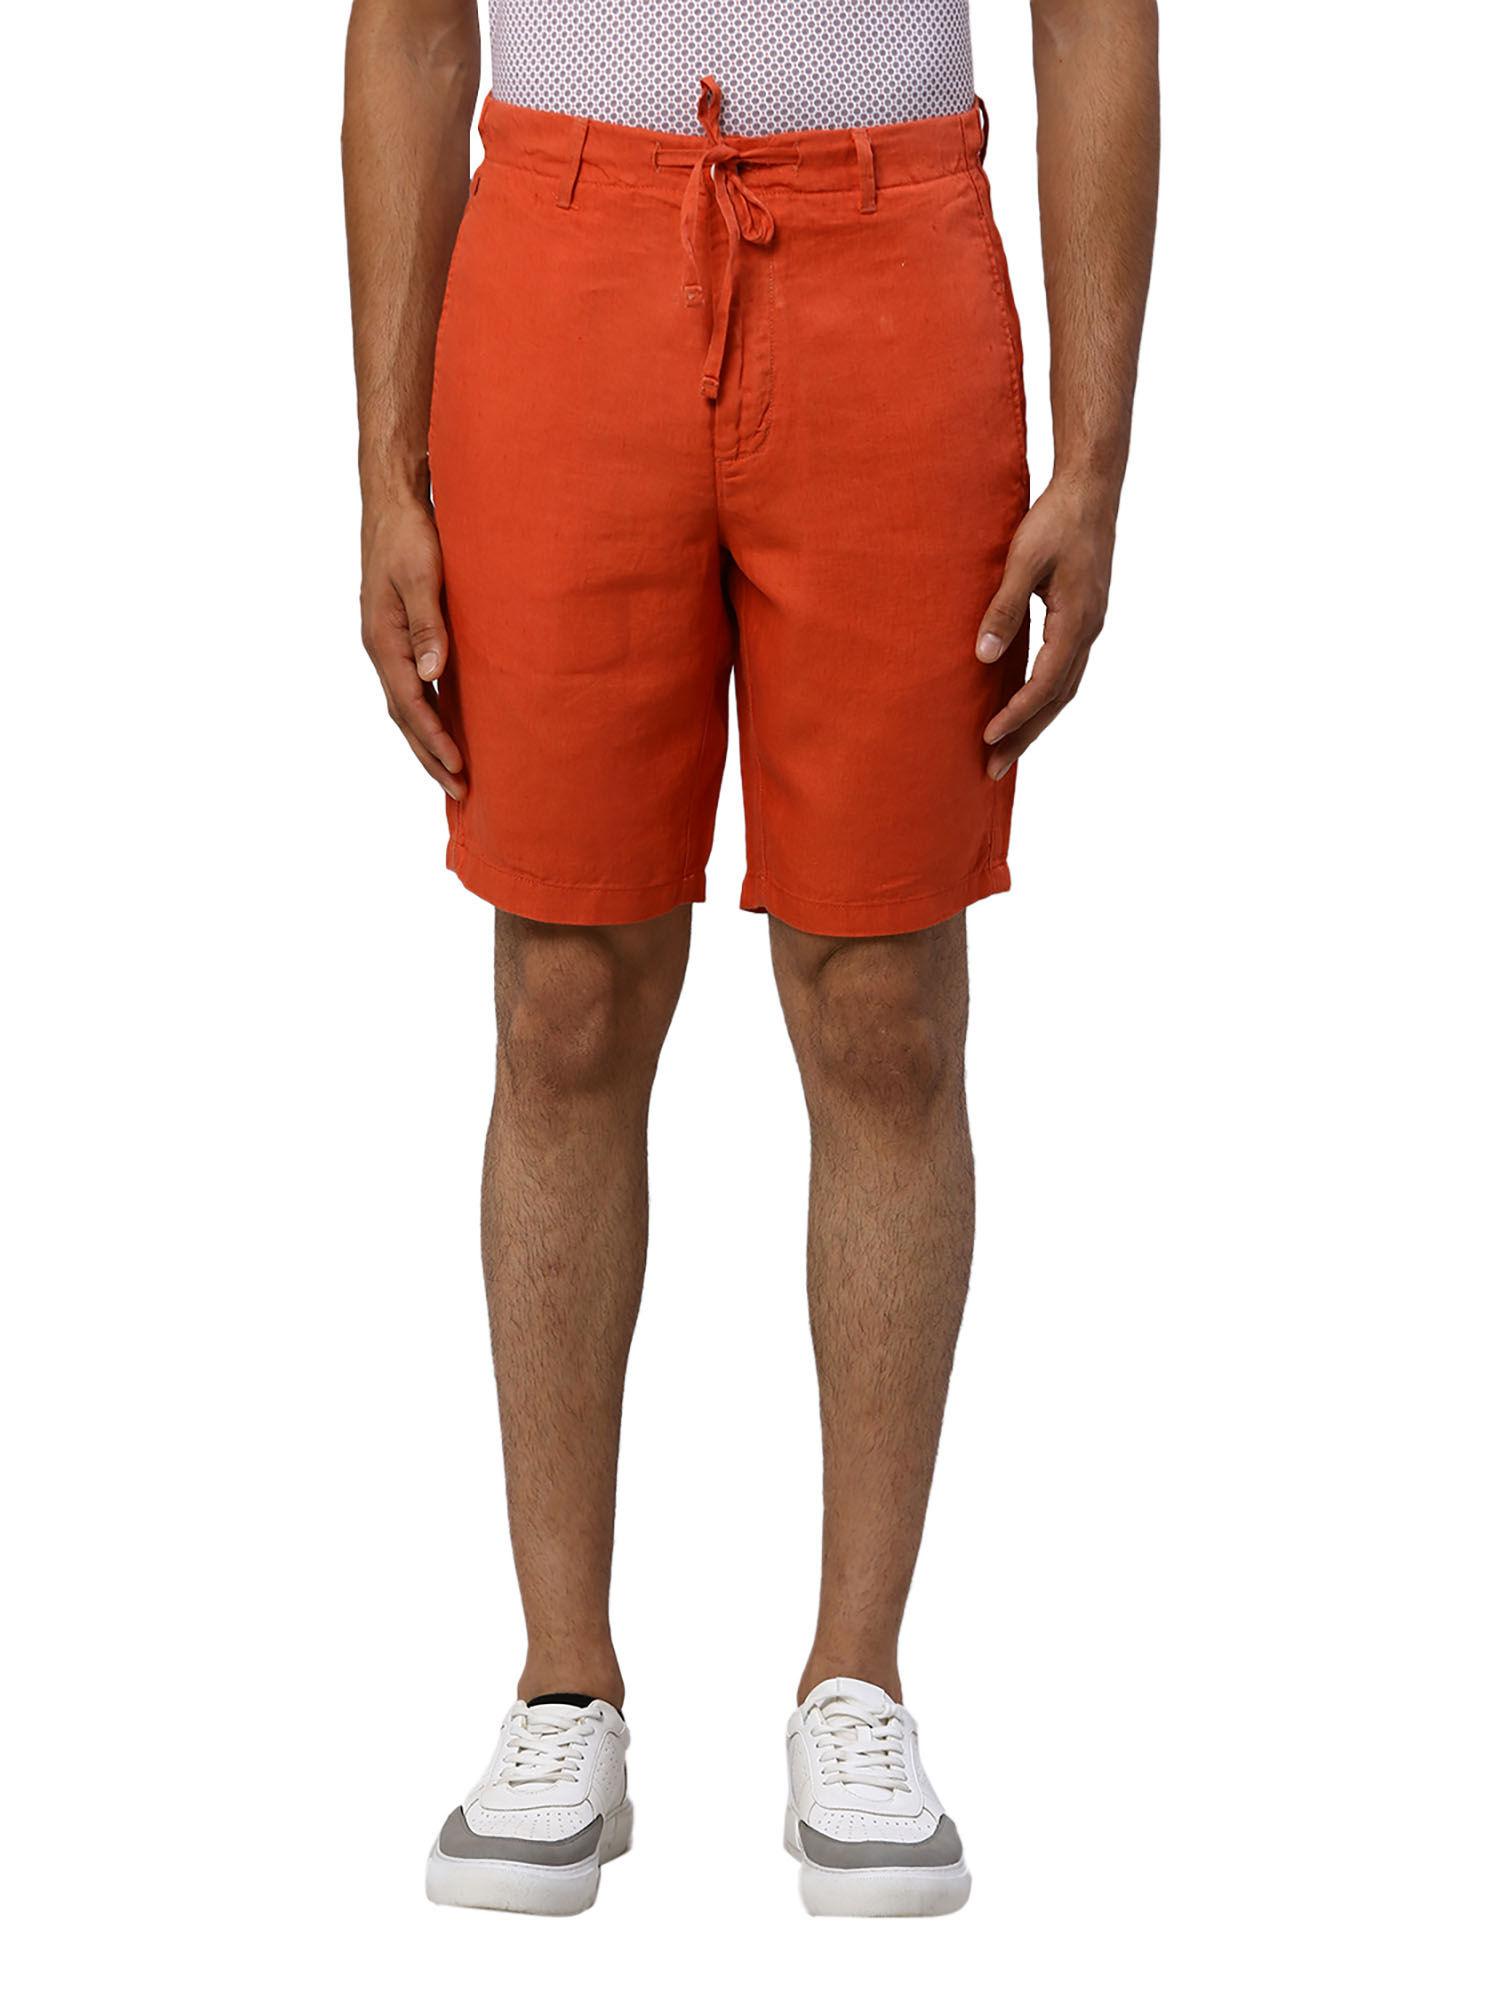 slim fit solid orange shorts